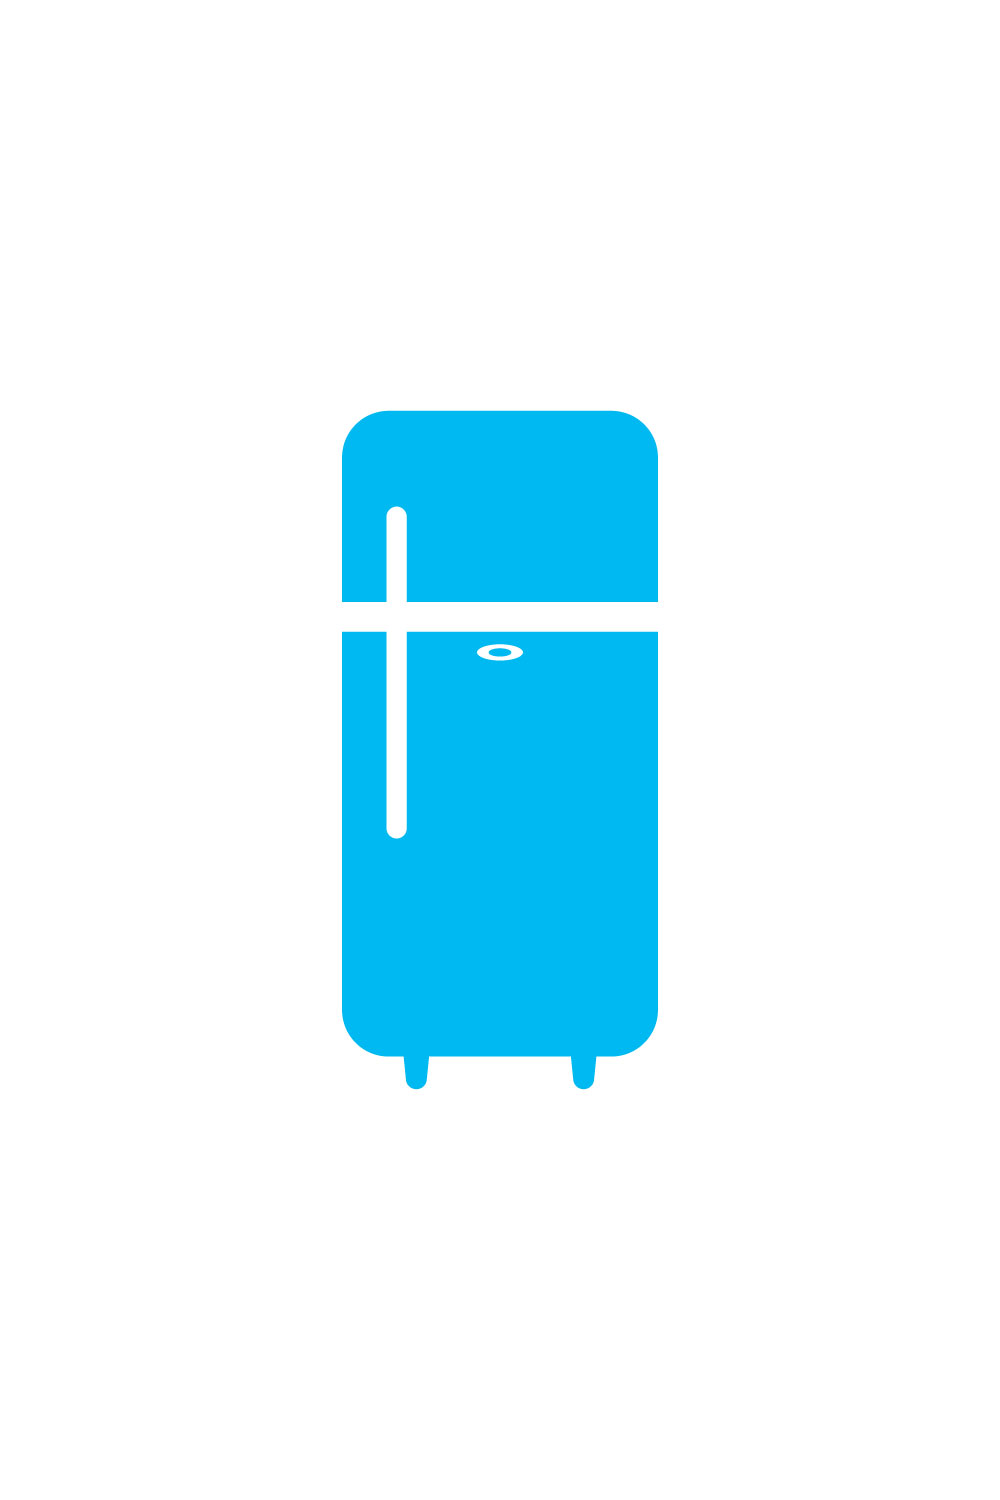 Refrigerator Logo Design, Vector design template pinterest preview image.